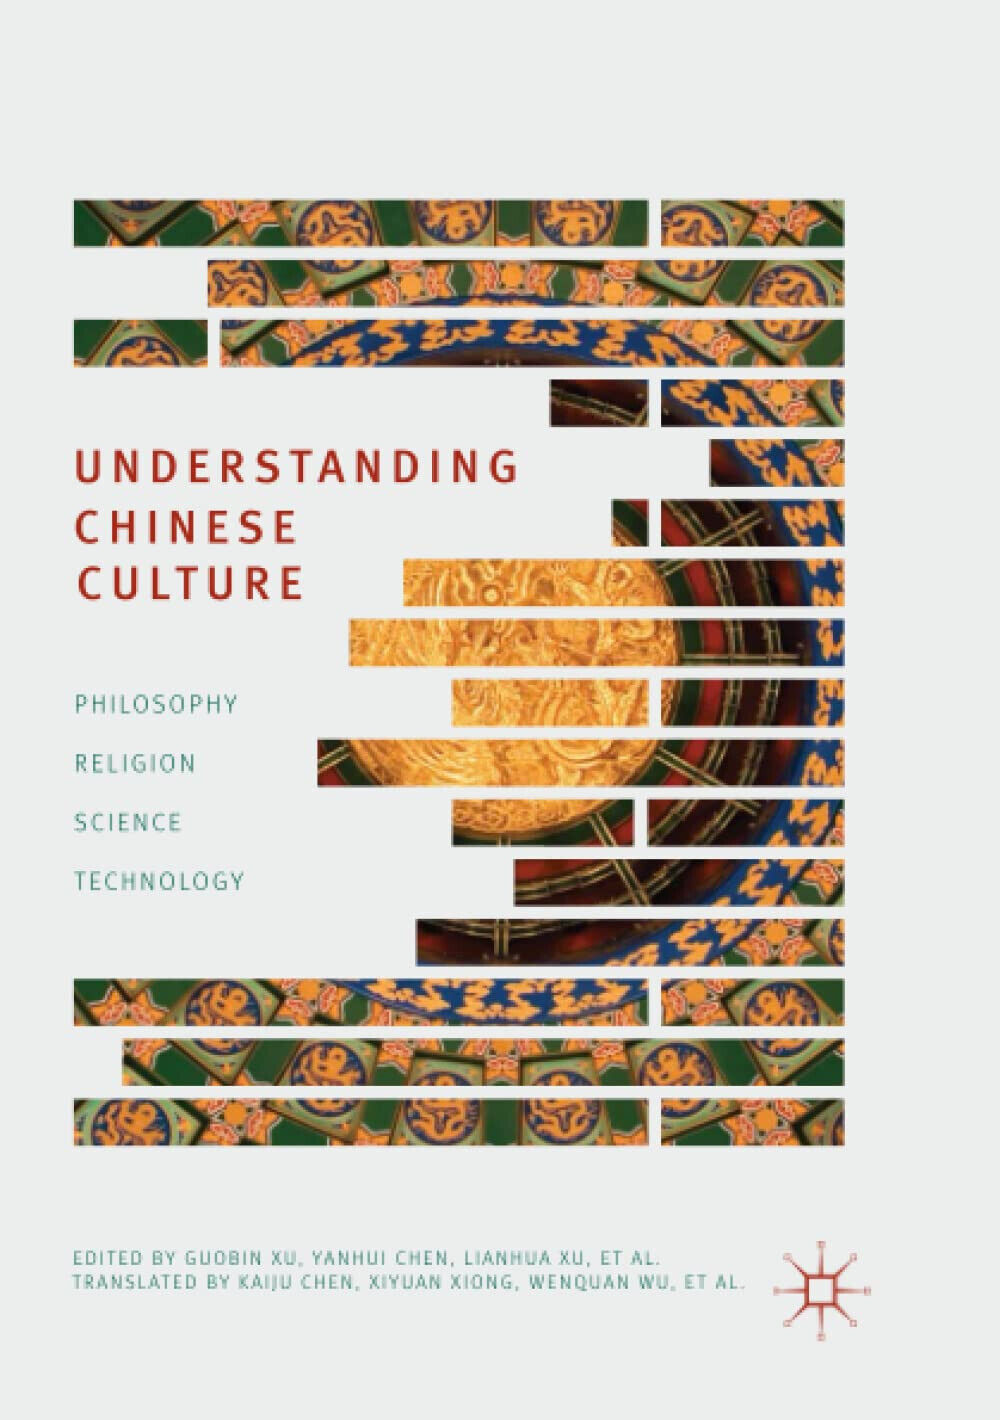 Understanding Chinese Culture - Guobin Xu - Palgrave, 2018